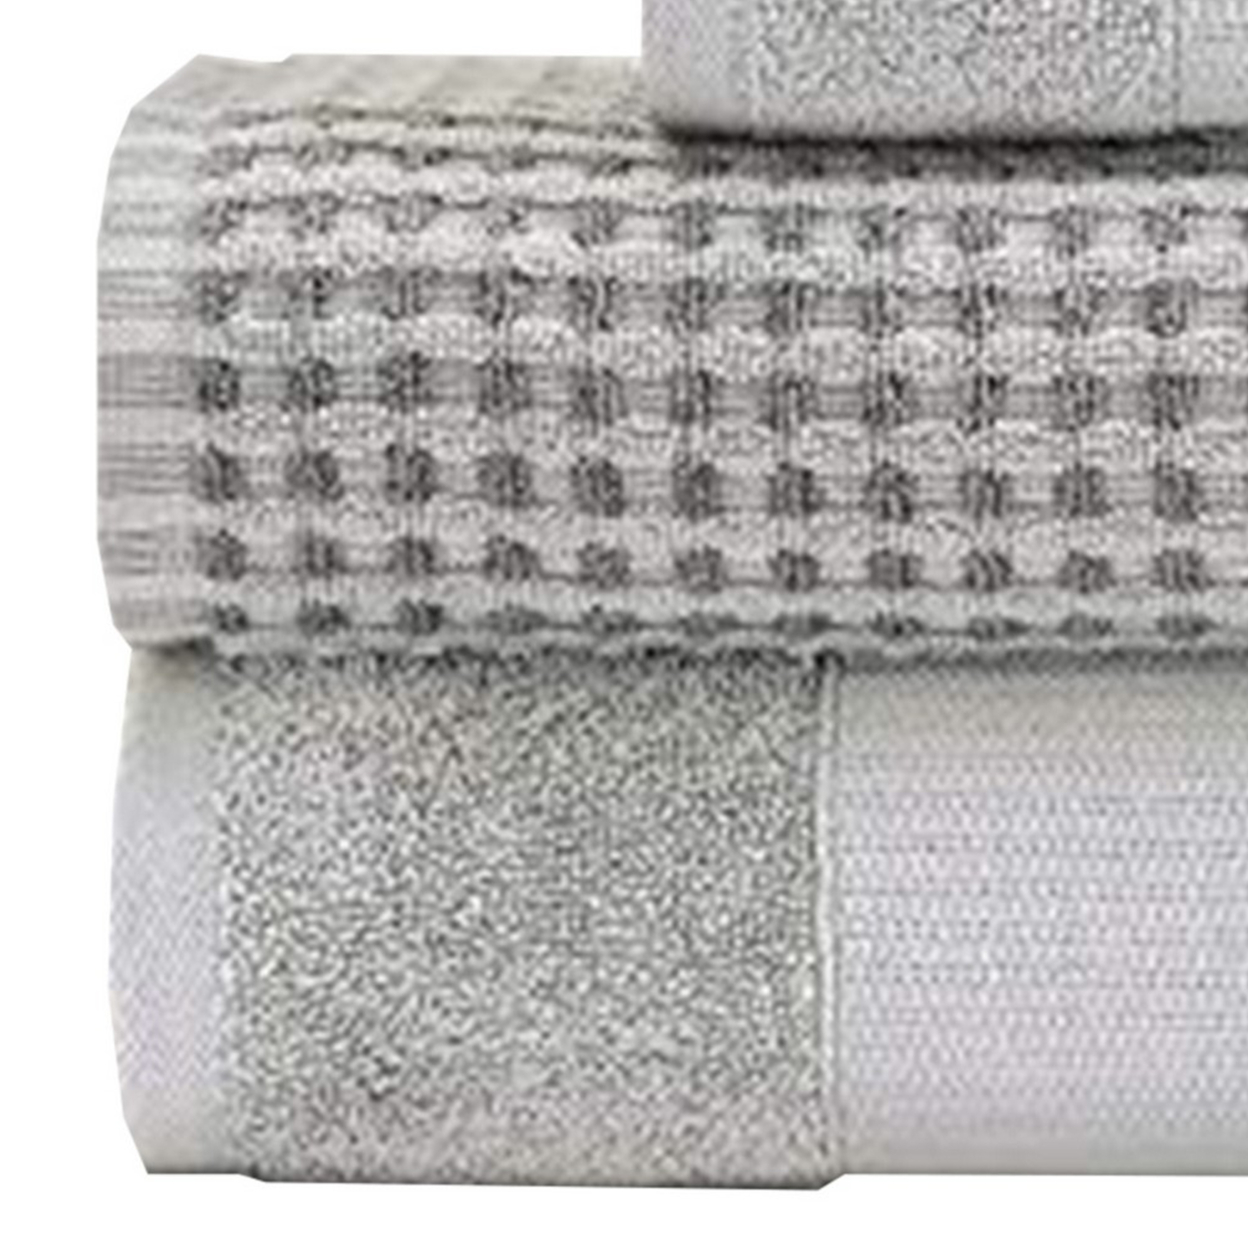 Porto 6 Piece Dual Tone Towel Set With Jacquard Pattern The Urban Port, Light Gray- Saltoro Sherpi